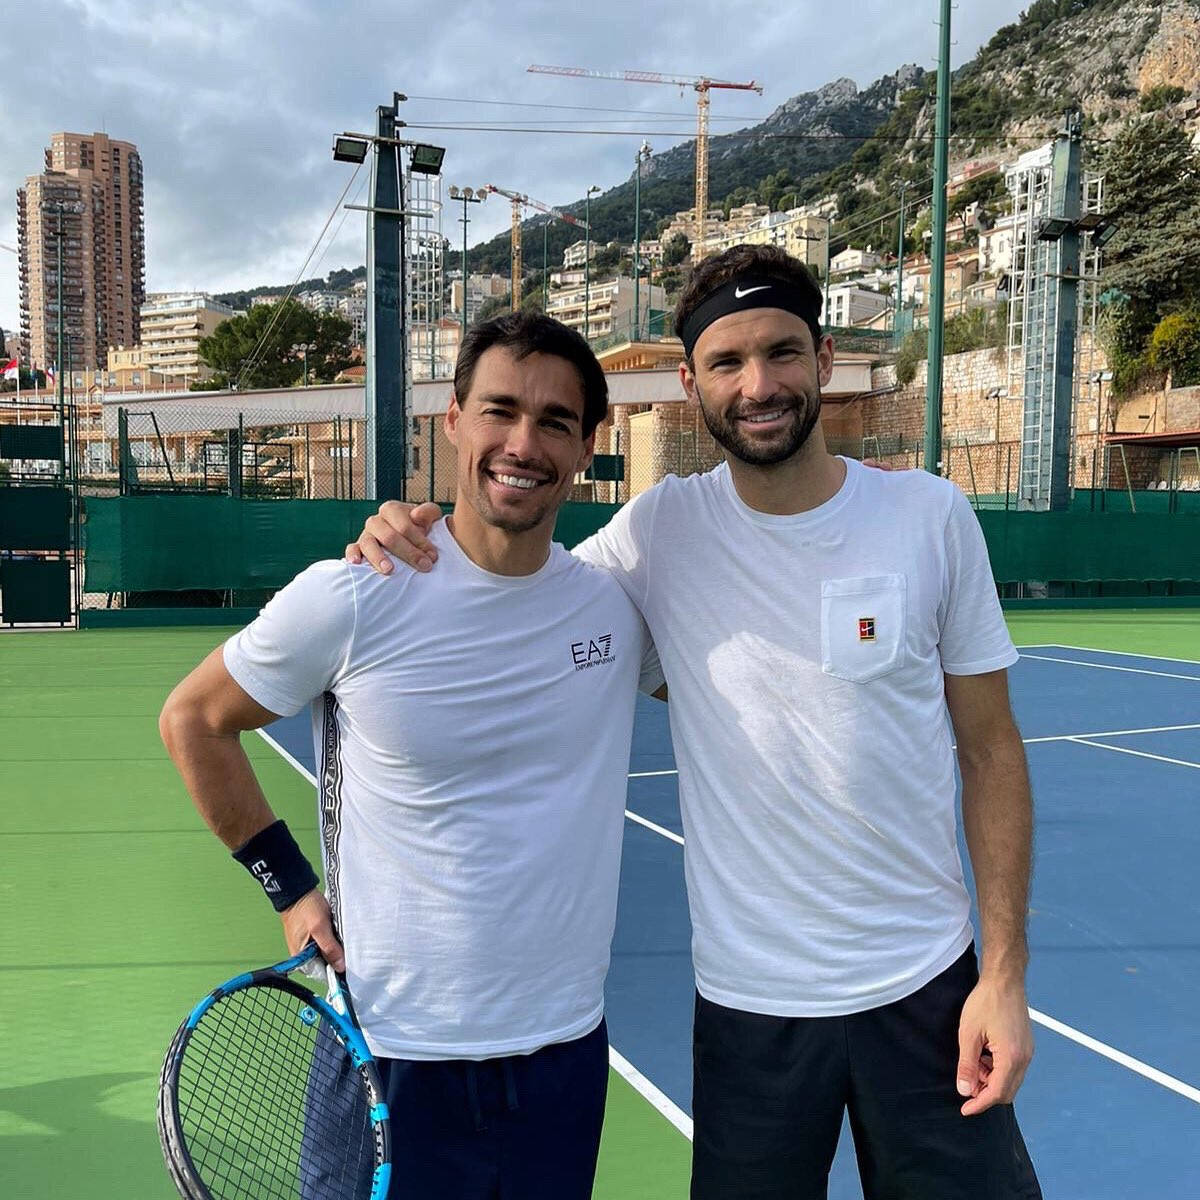 Fabio Fognini og Grigor Dimitrov - Udtryk deres tennis passion Wallpaper